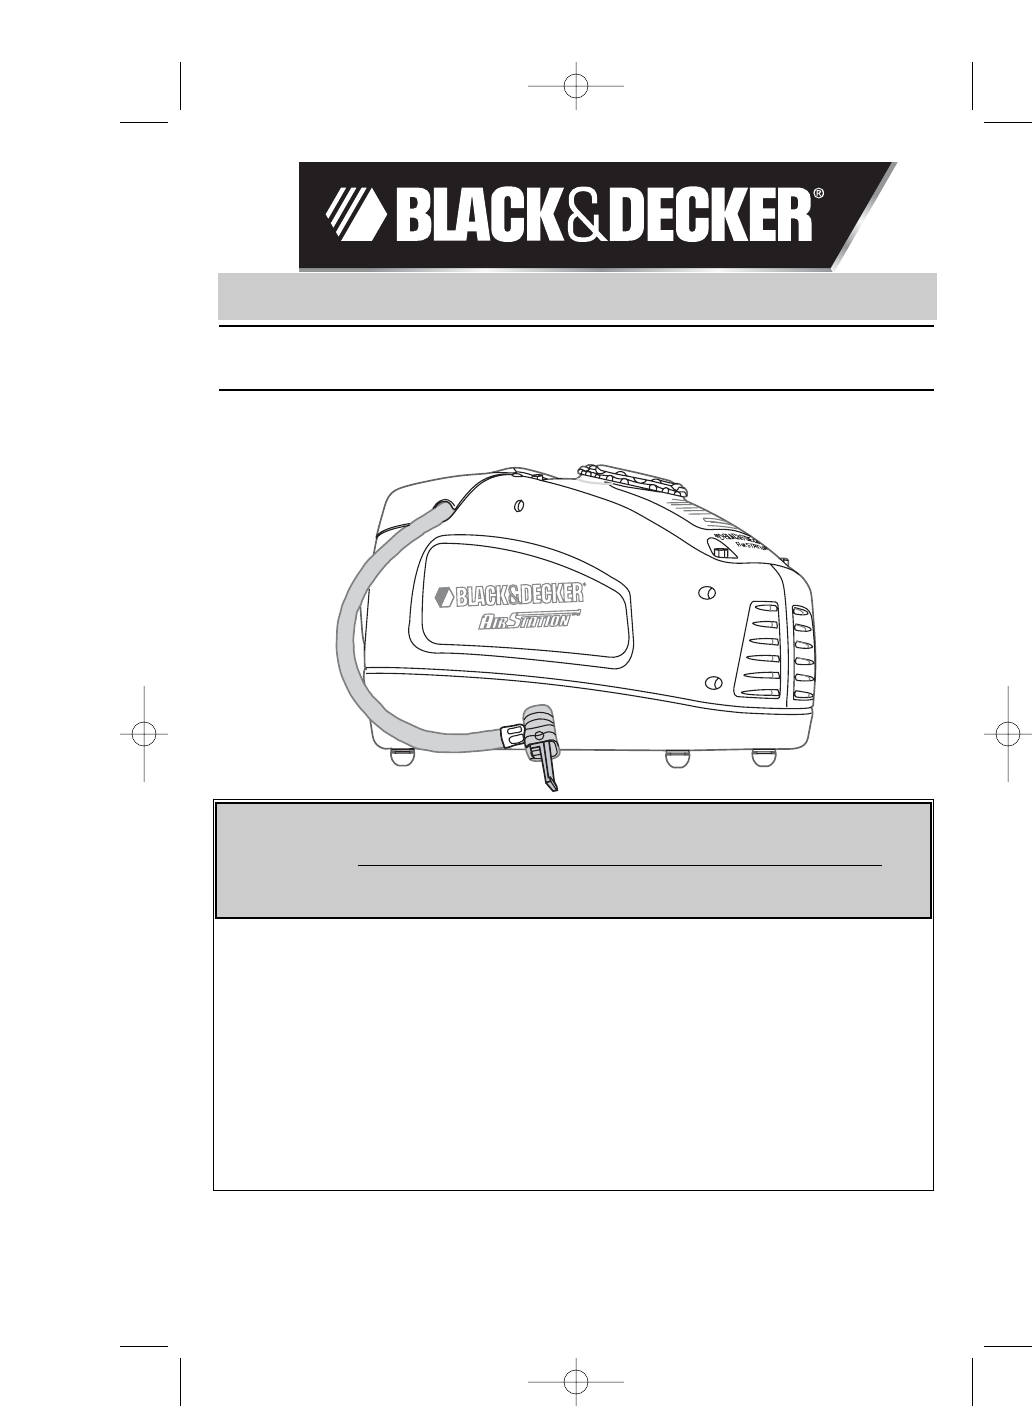 Black & Decker Air Compressor ASI500 User Guide